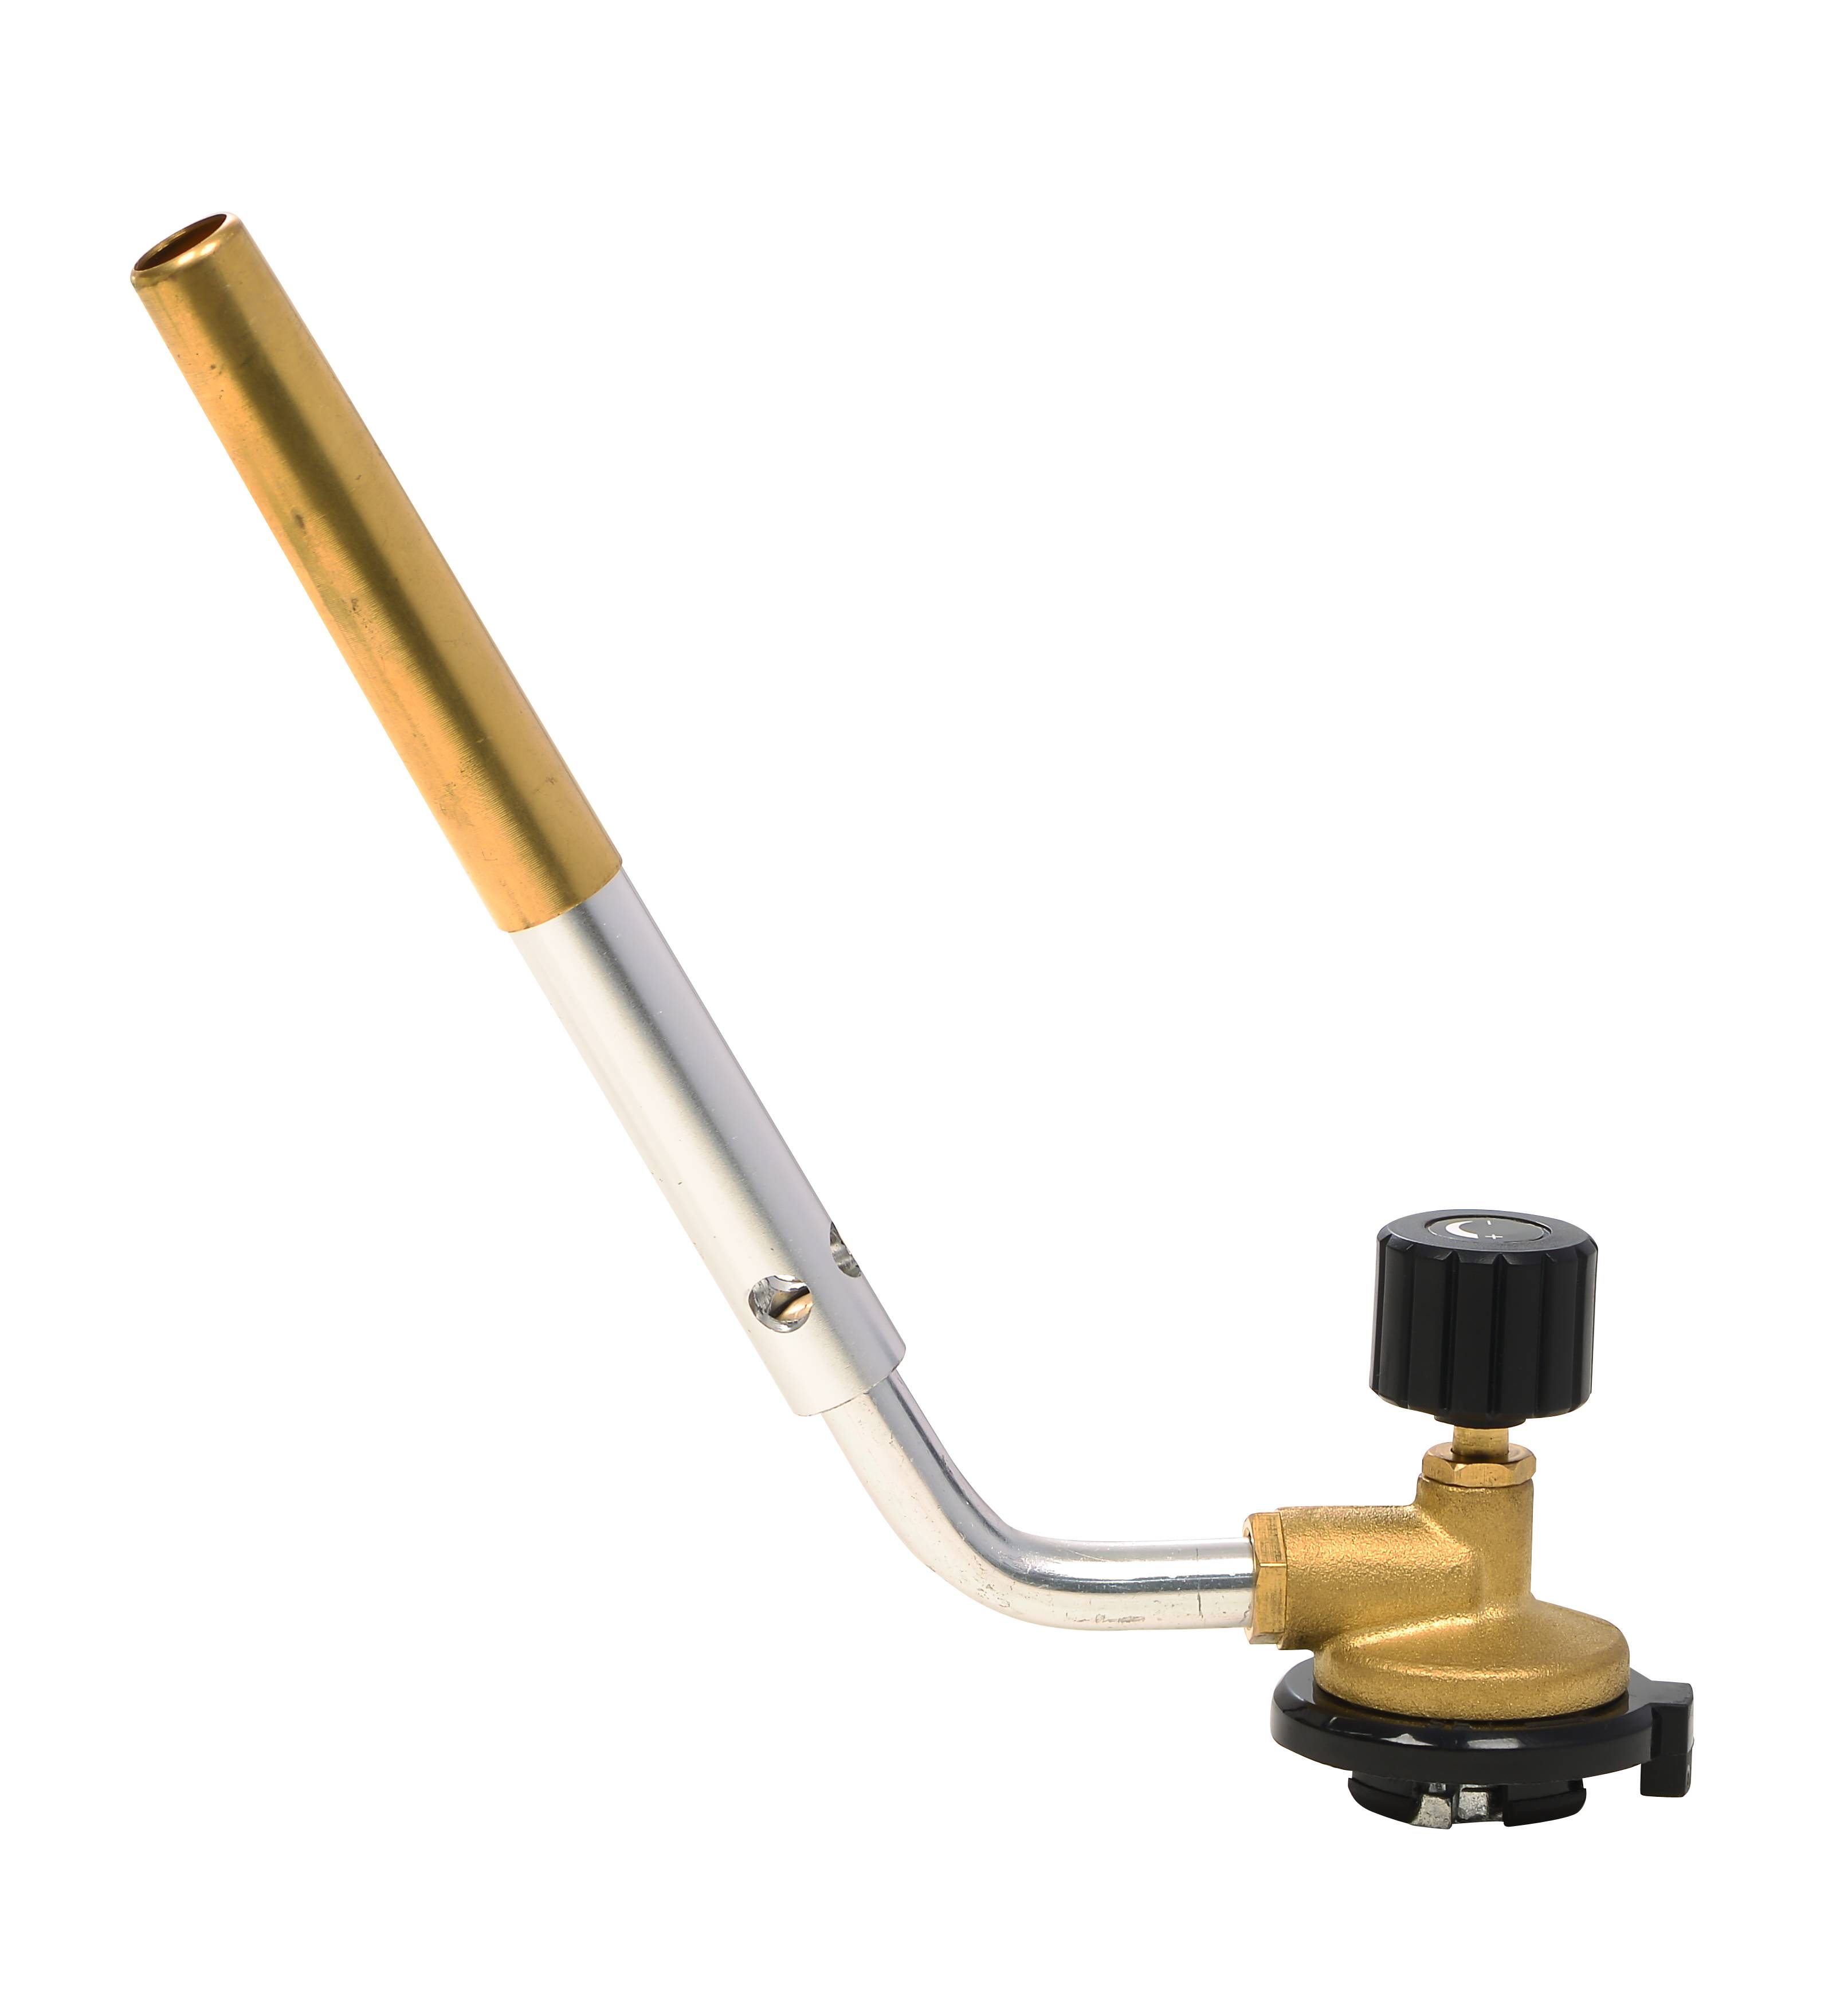 Hot-selling Gas Torch Lighter - 360 degree free rotation  brass tube Brazing set torch KLL-7018D – Kalilong